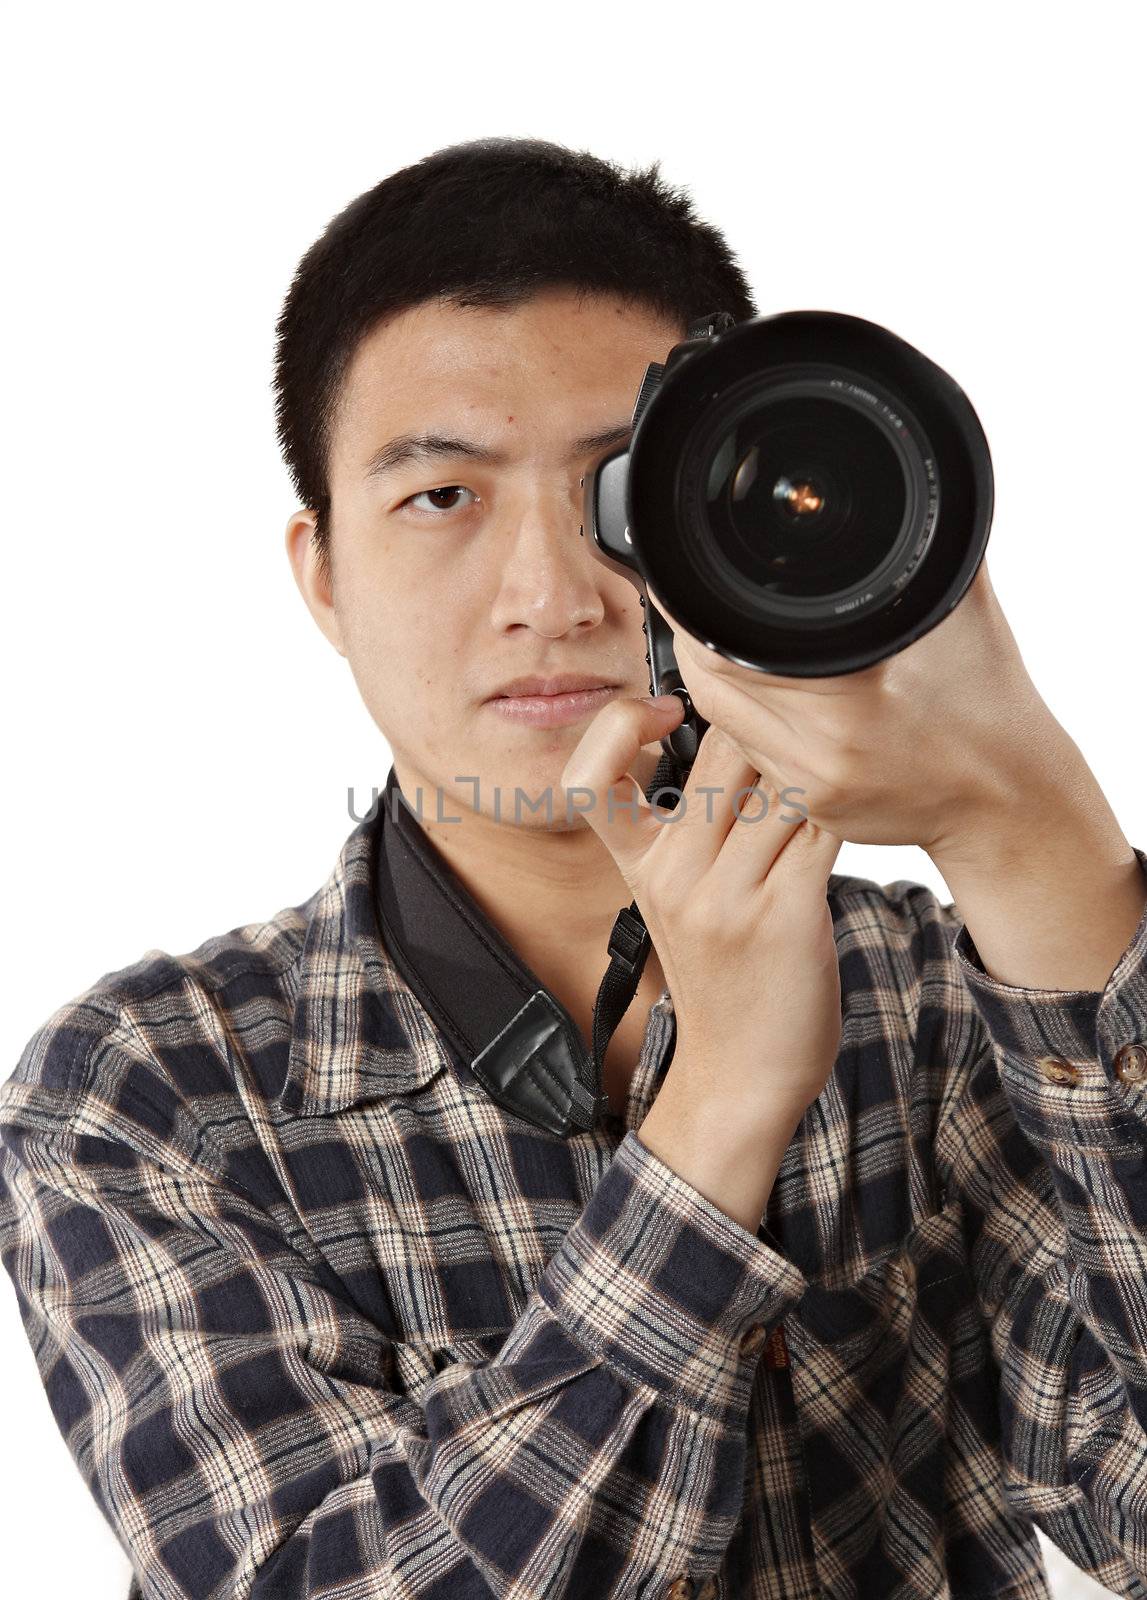 Male photographer holding camera